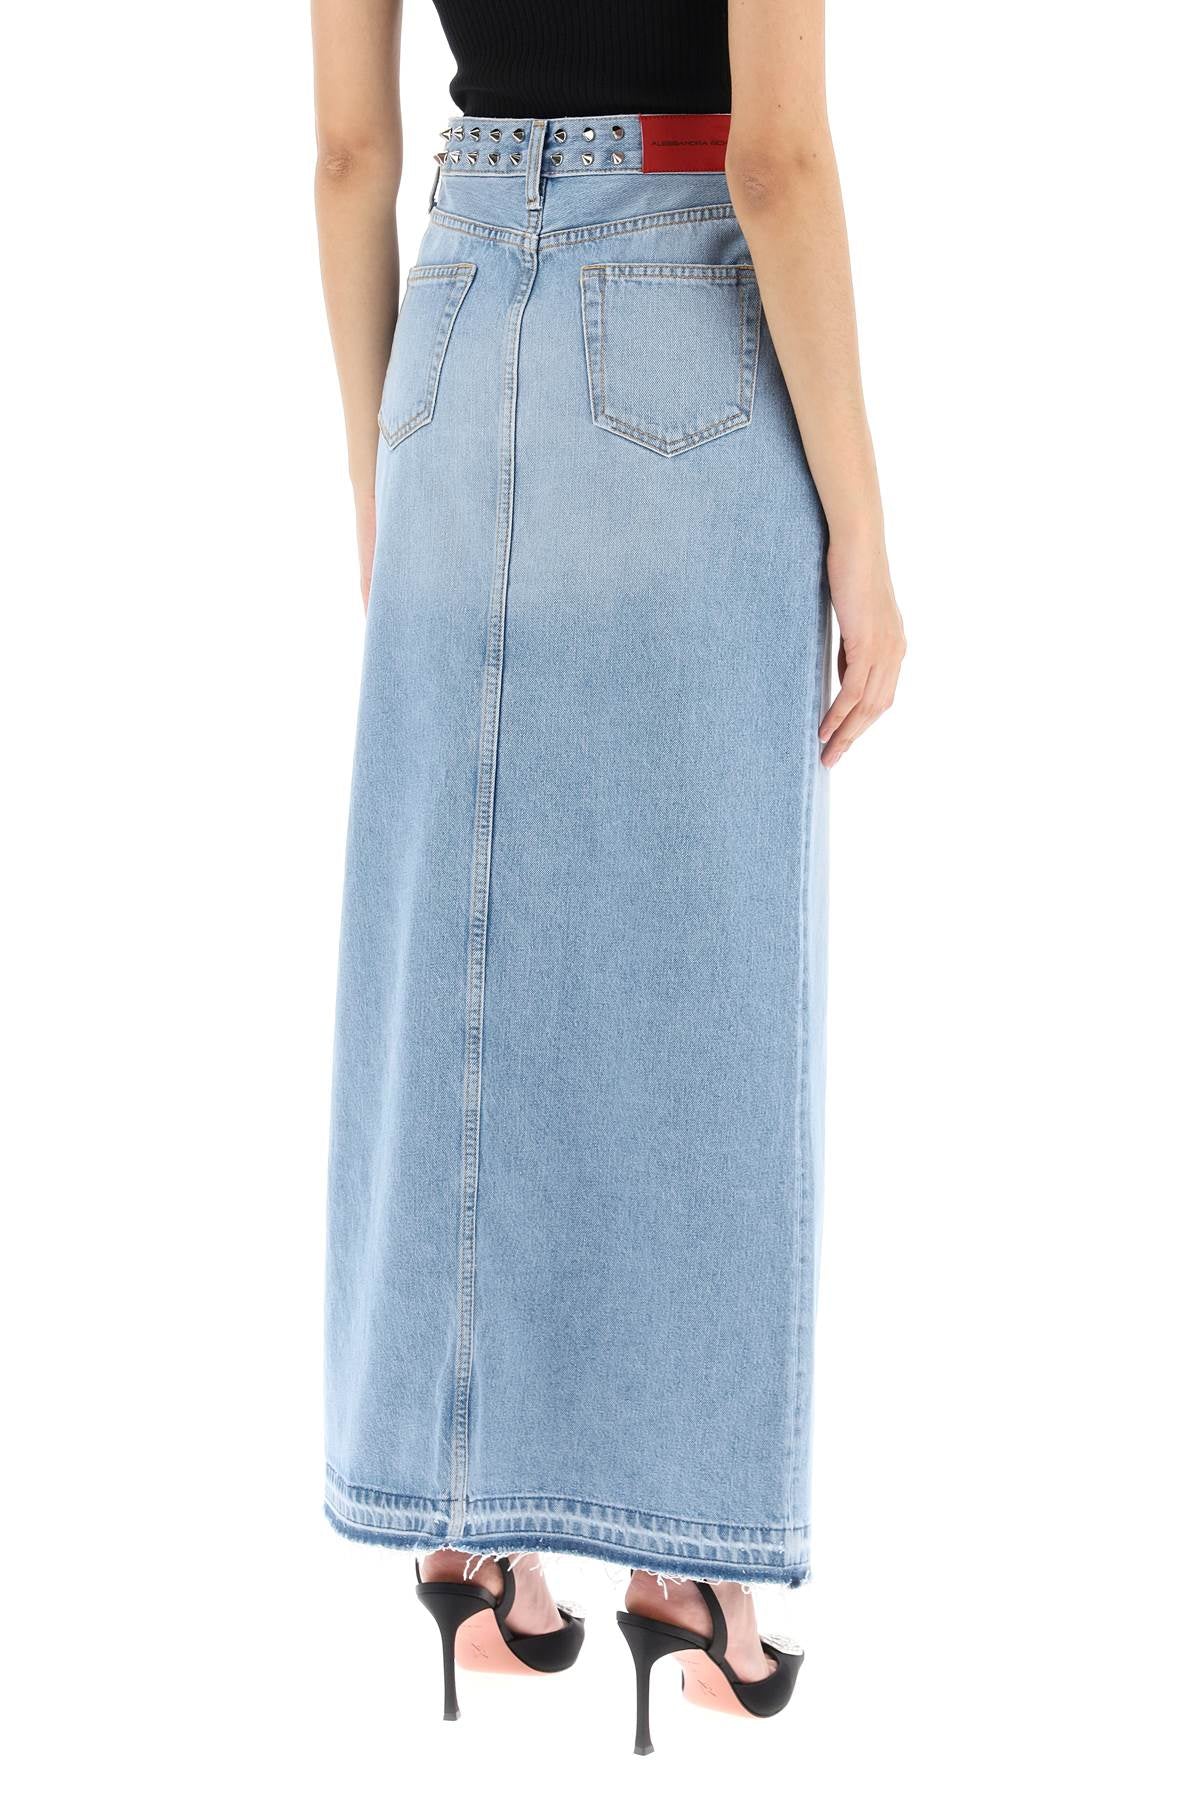 Alessandra rich long denim skirt with studs-women > clothing > skirts > maxi-Alessandra Rich-27-Light blue-Urbanheer